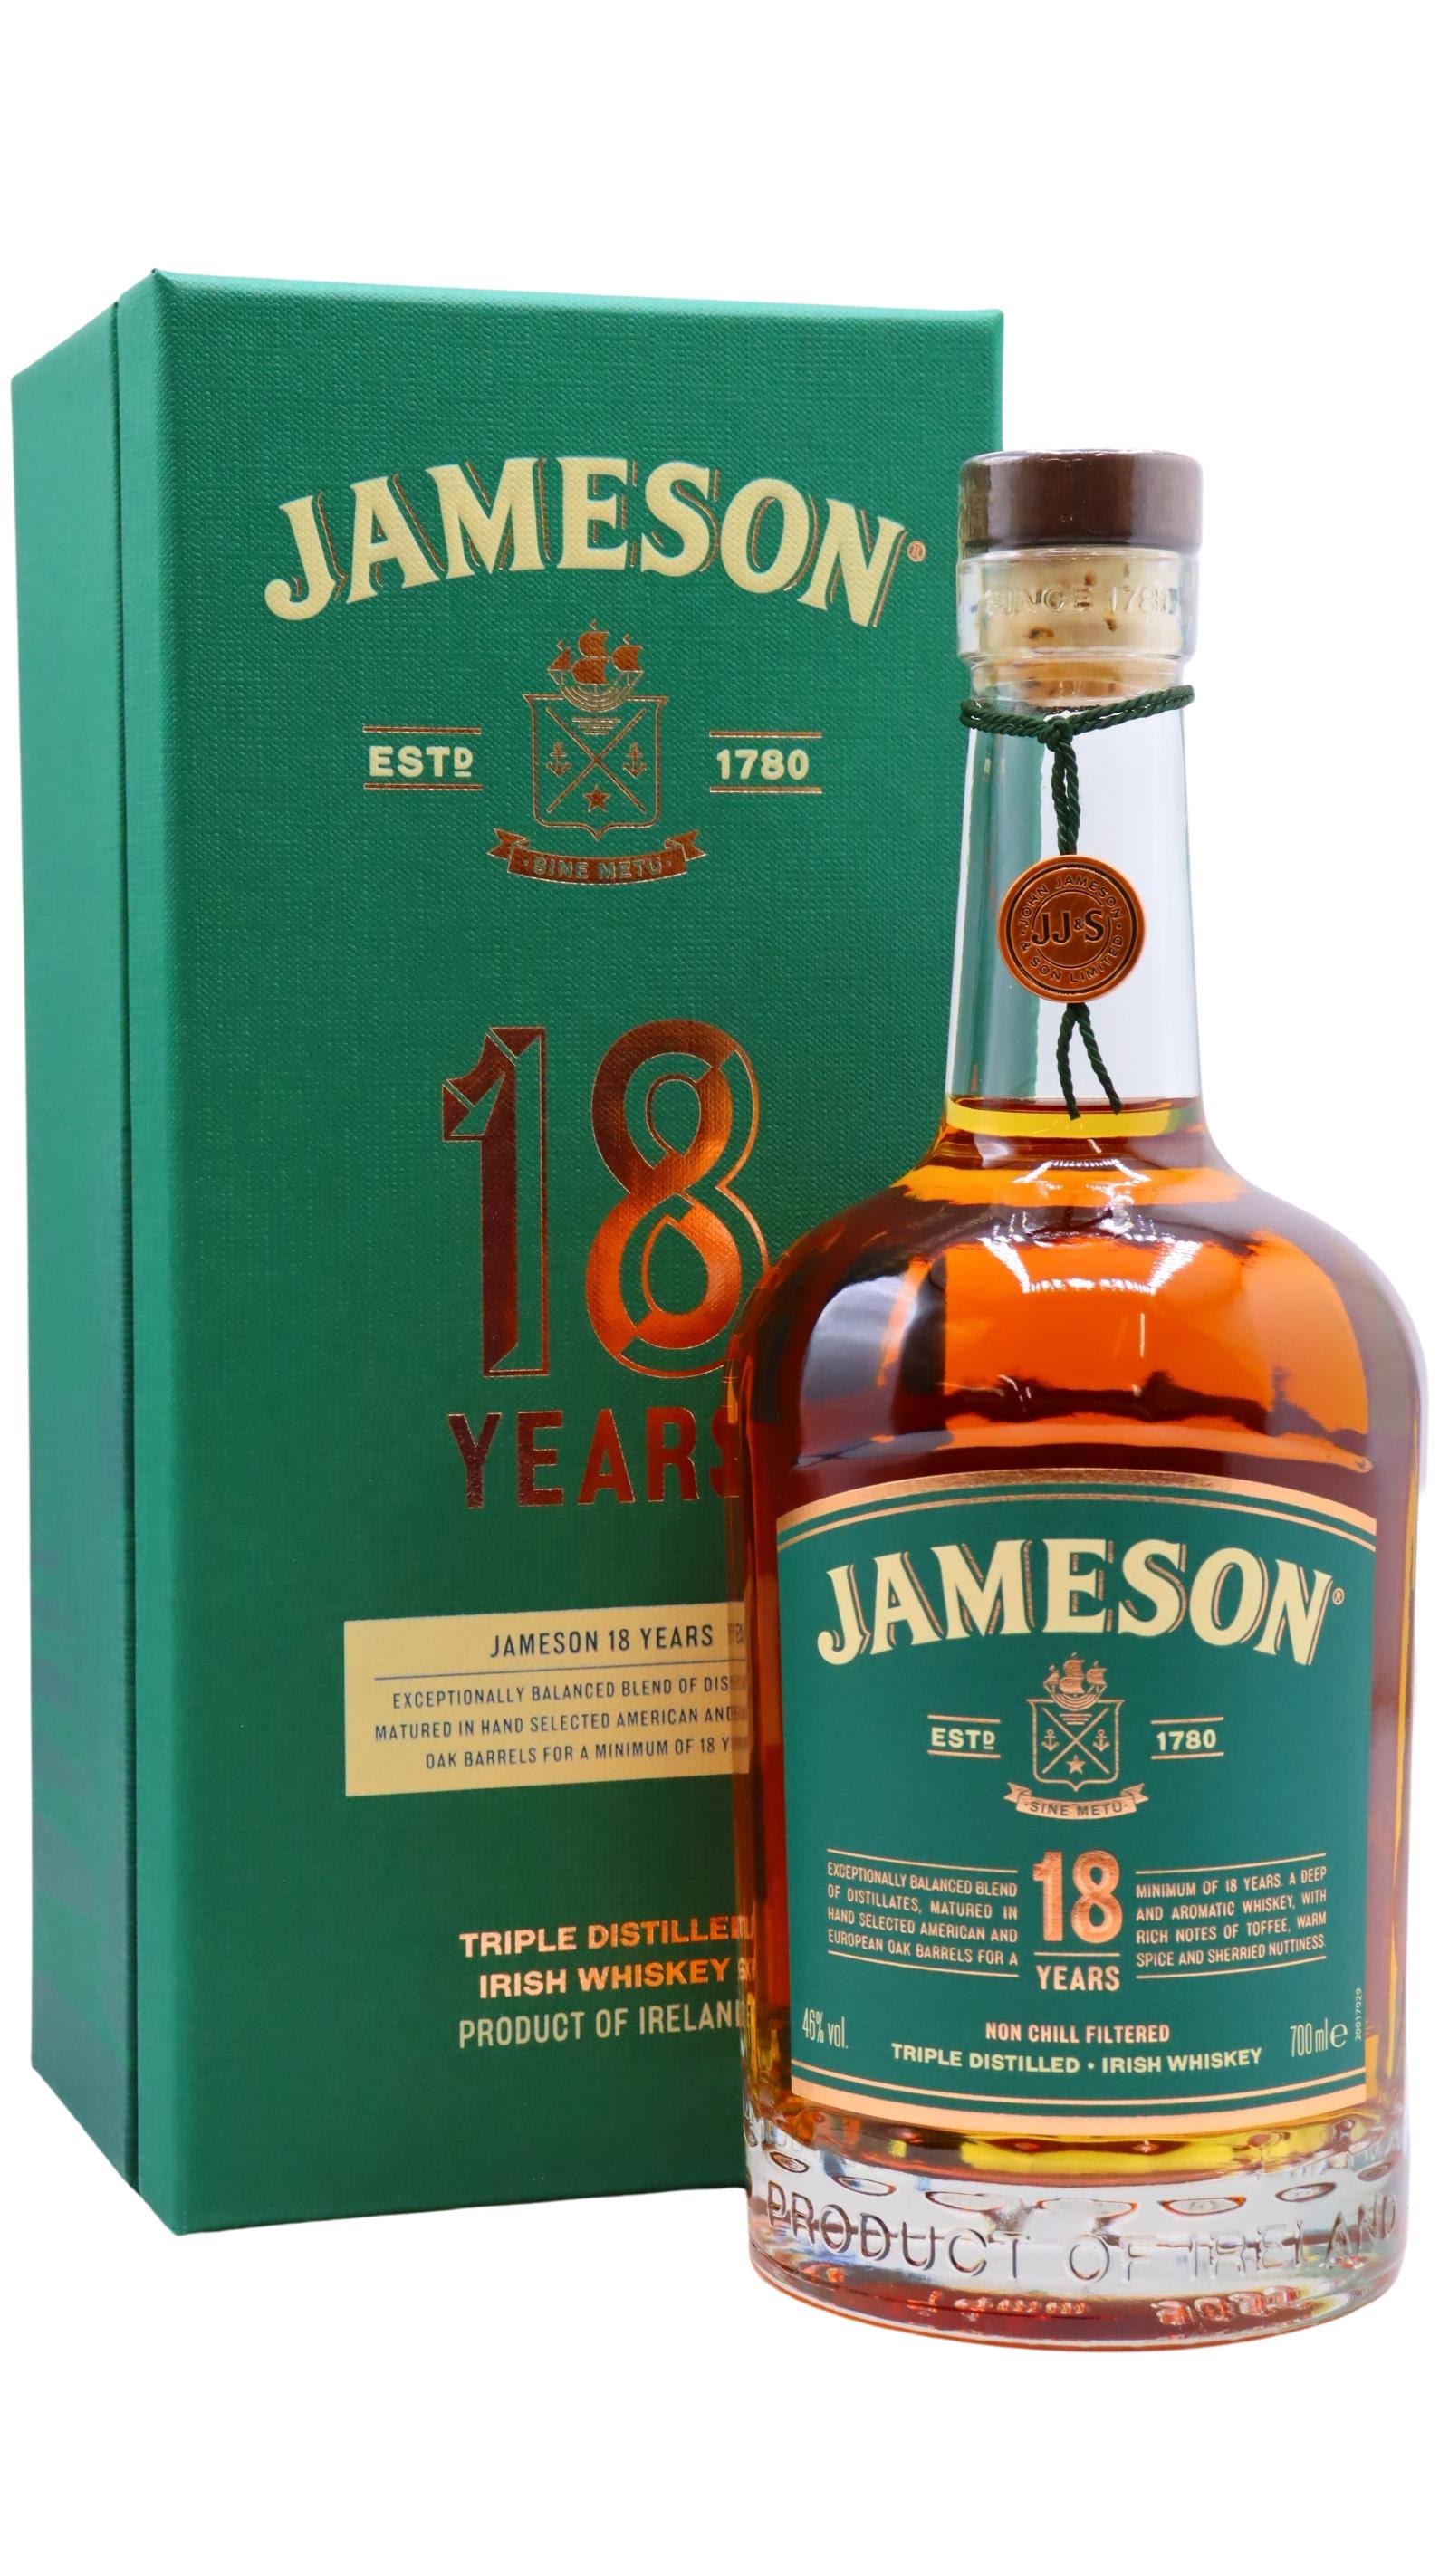 Jameson 18 Year Limited Reserve Irish Whiskey - 750ml